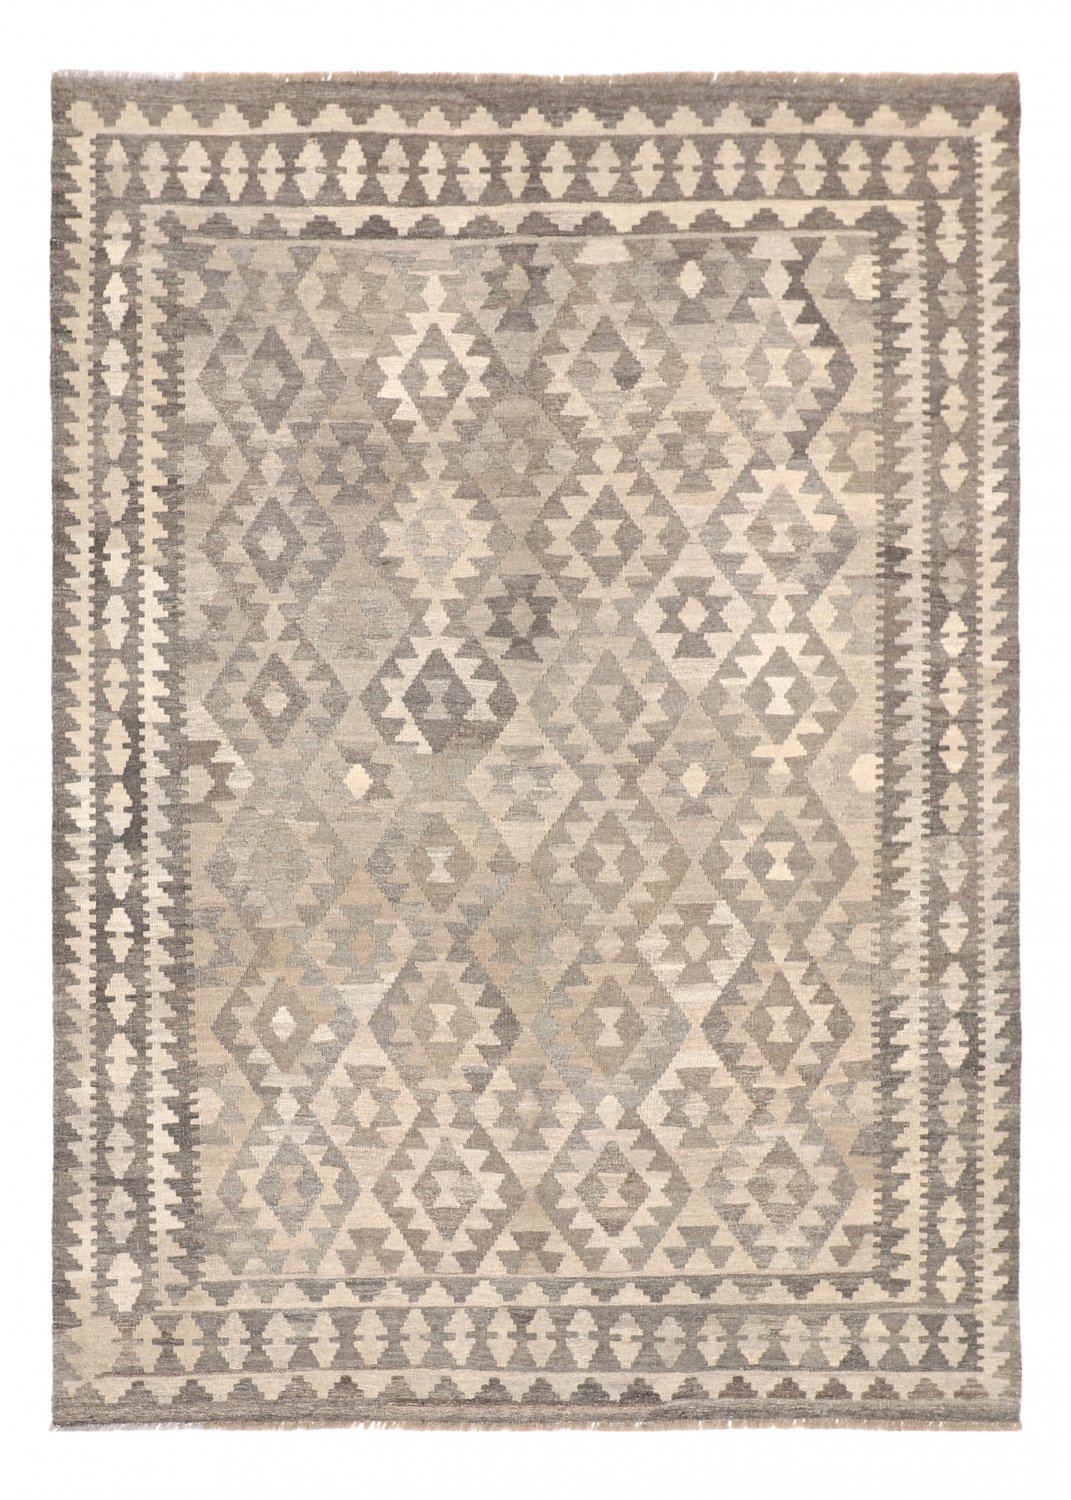 Kilim rug Afghan 243 x 176 cm